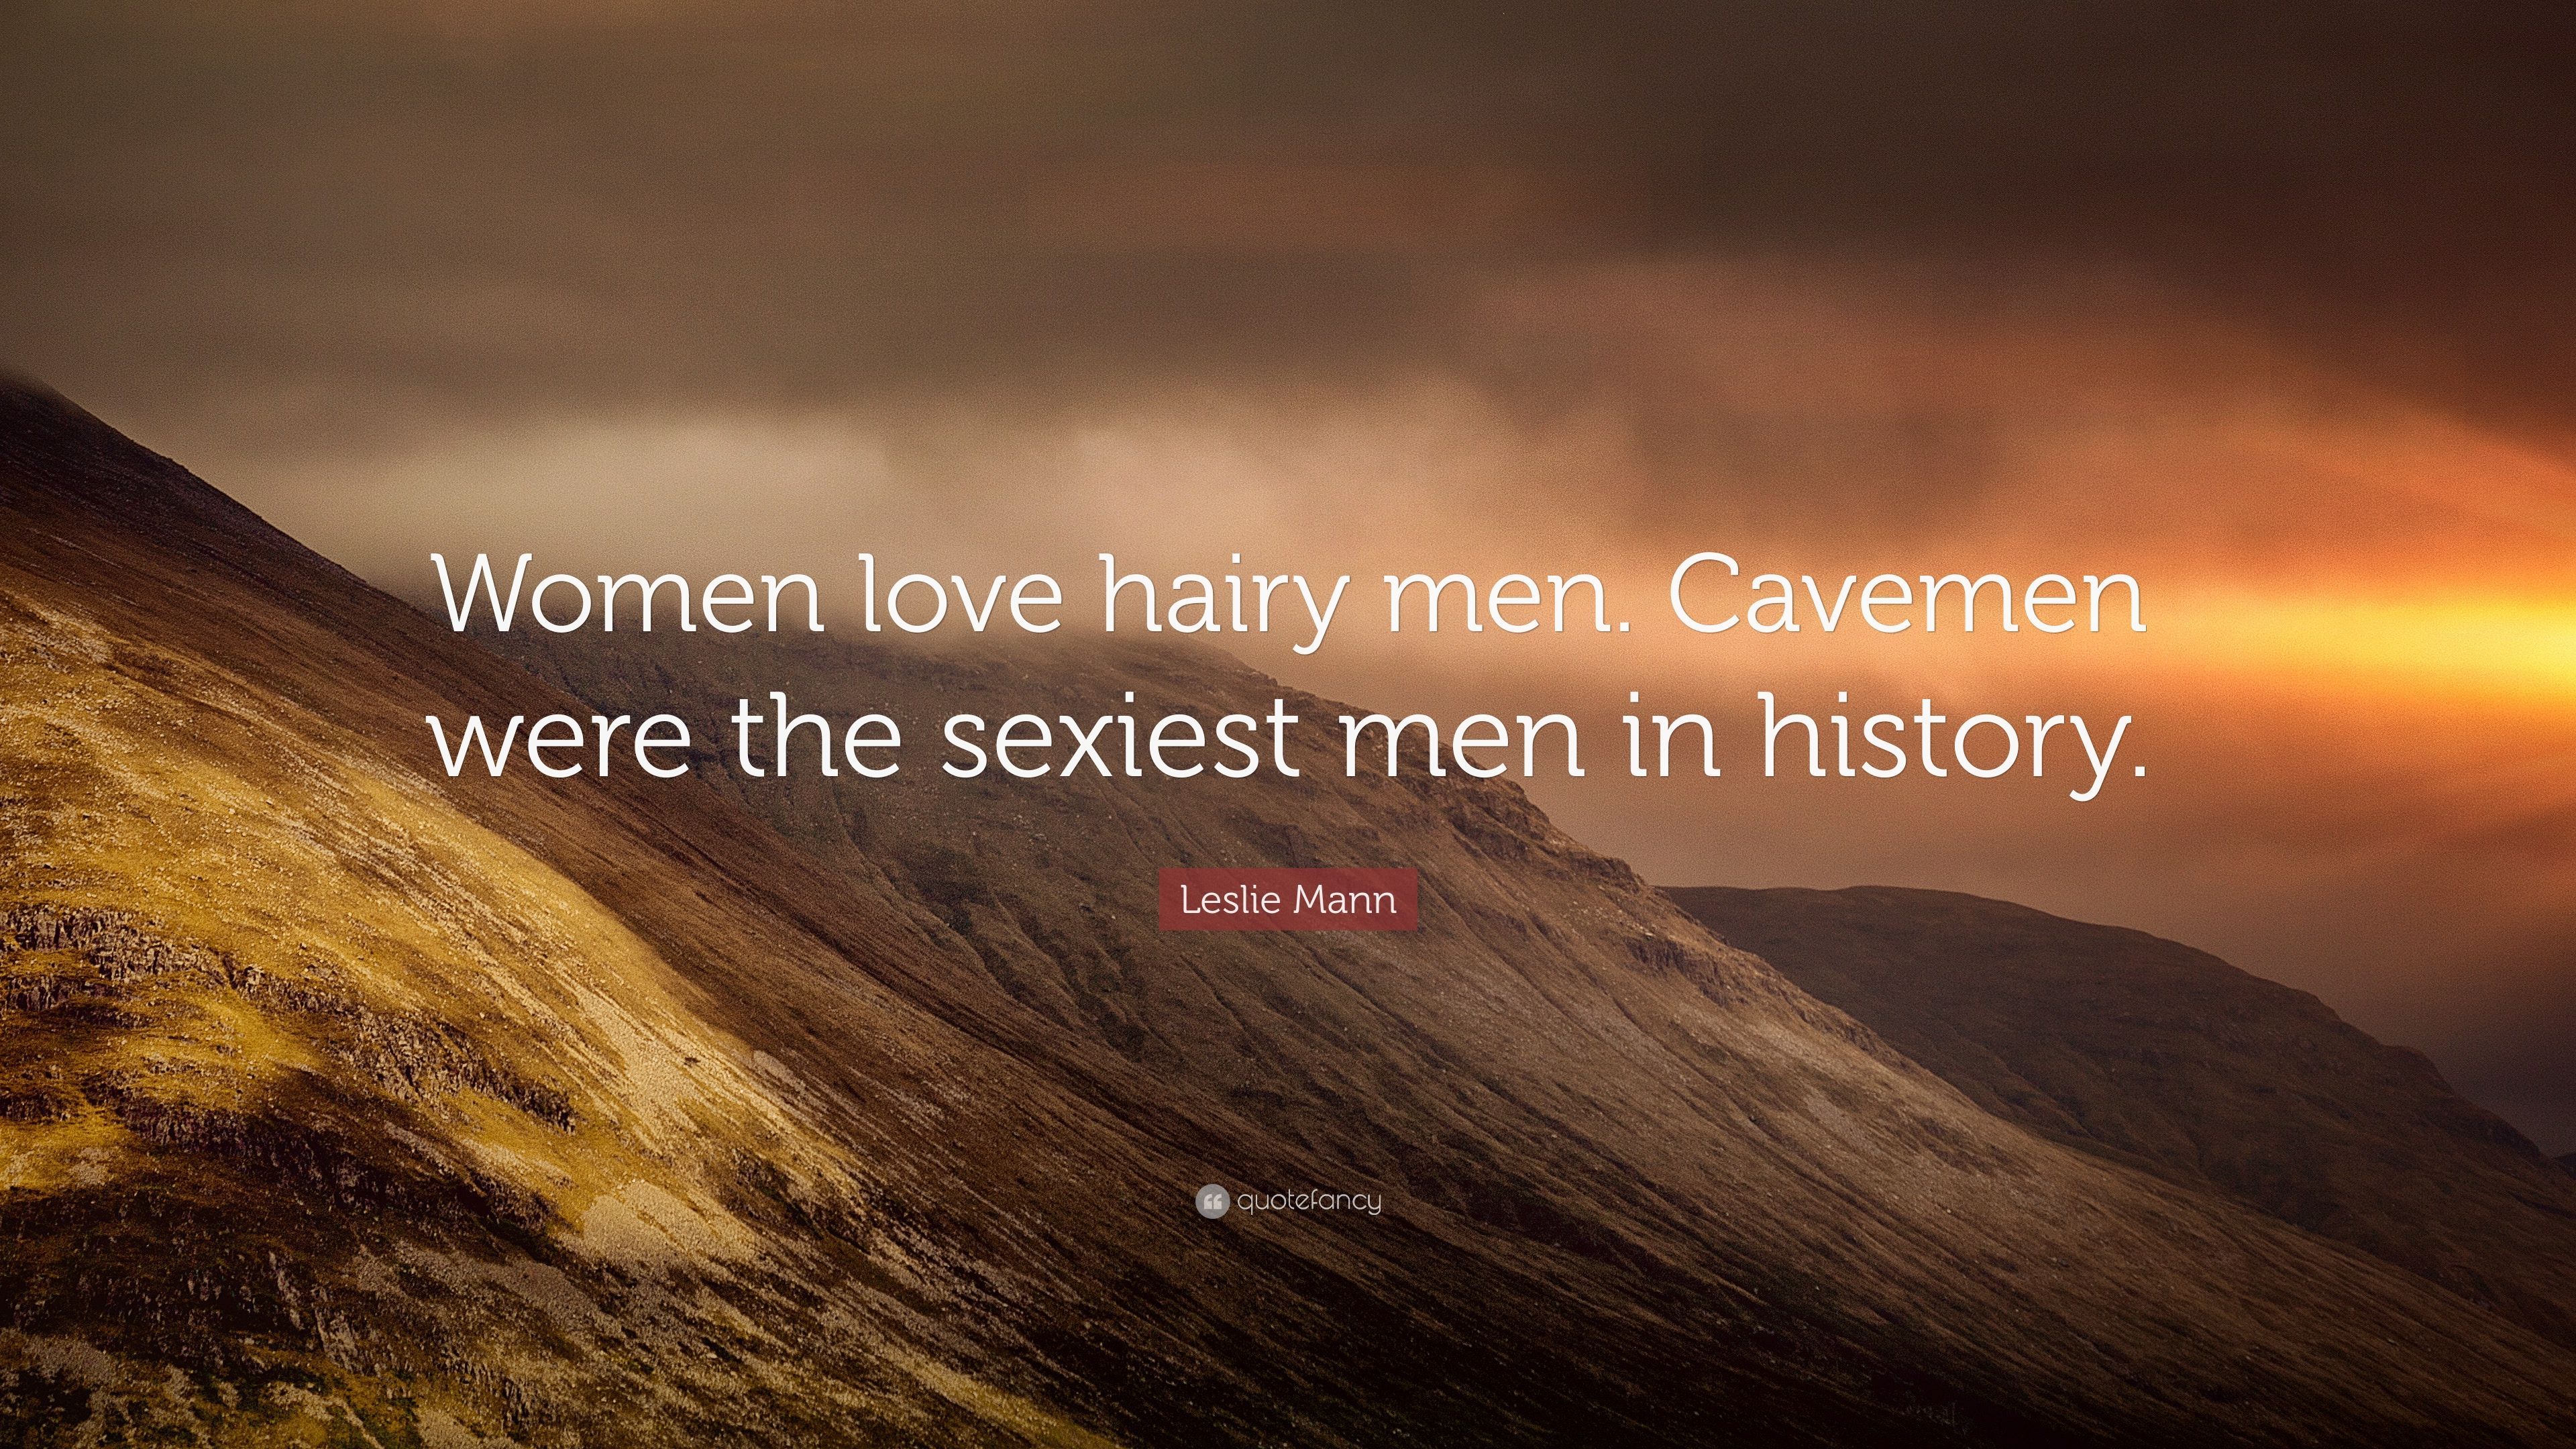 Leslie Mann Quote: “Women love hairy men. Cavemen were the